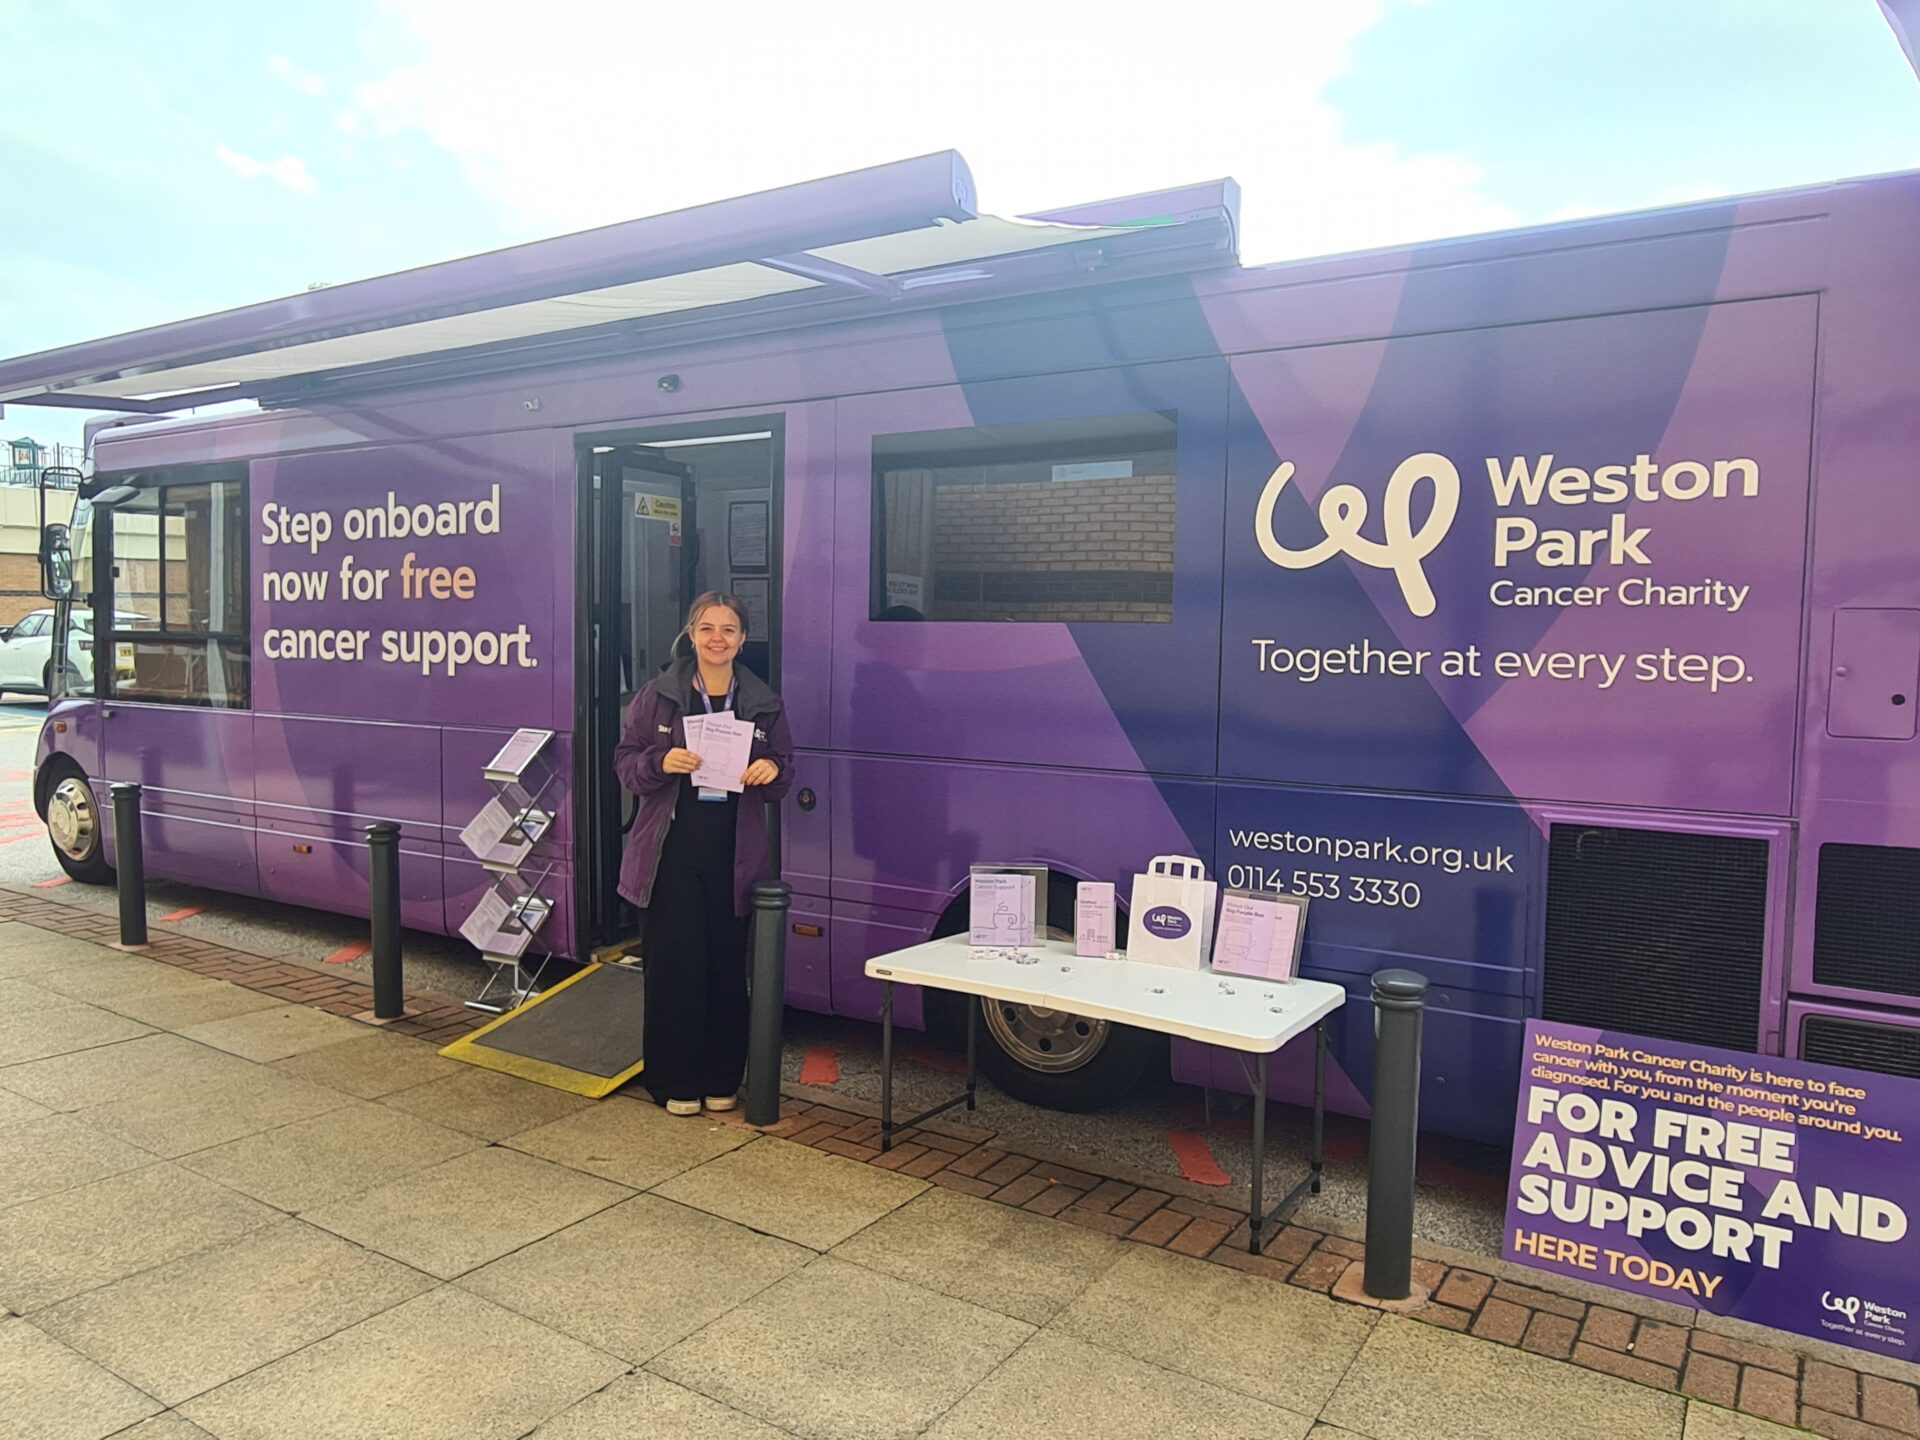 Weston Park Cancer Charity’s Big Purple Bus to visit Lakeside Village